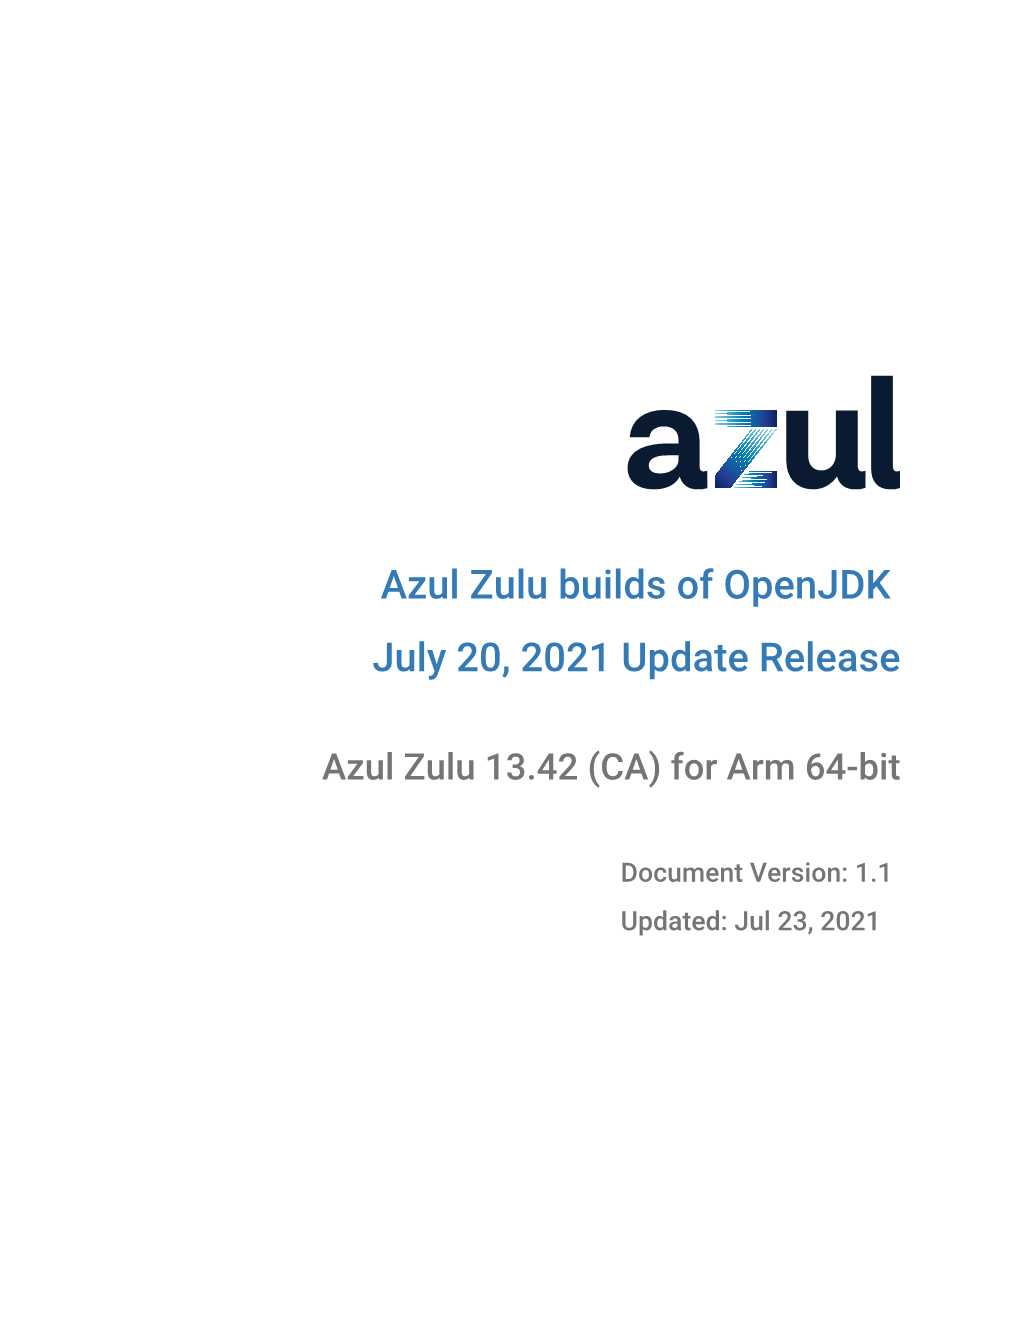 Azul Zulu Builds of Openjdk July 20, 2021 Update Release: Azul Zulu 13.42 (CA) for Arm 64-Bit